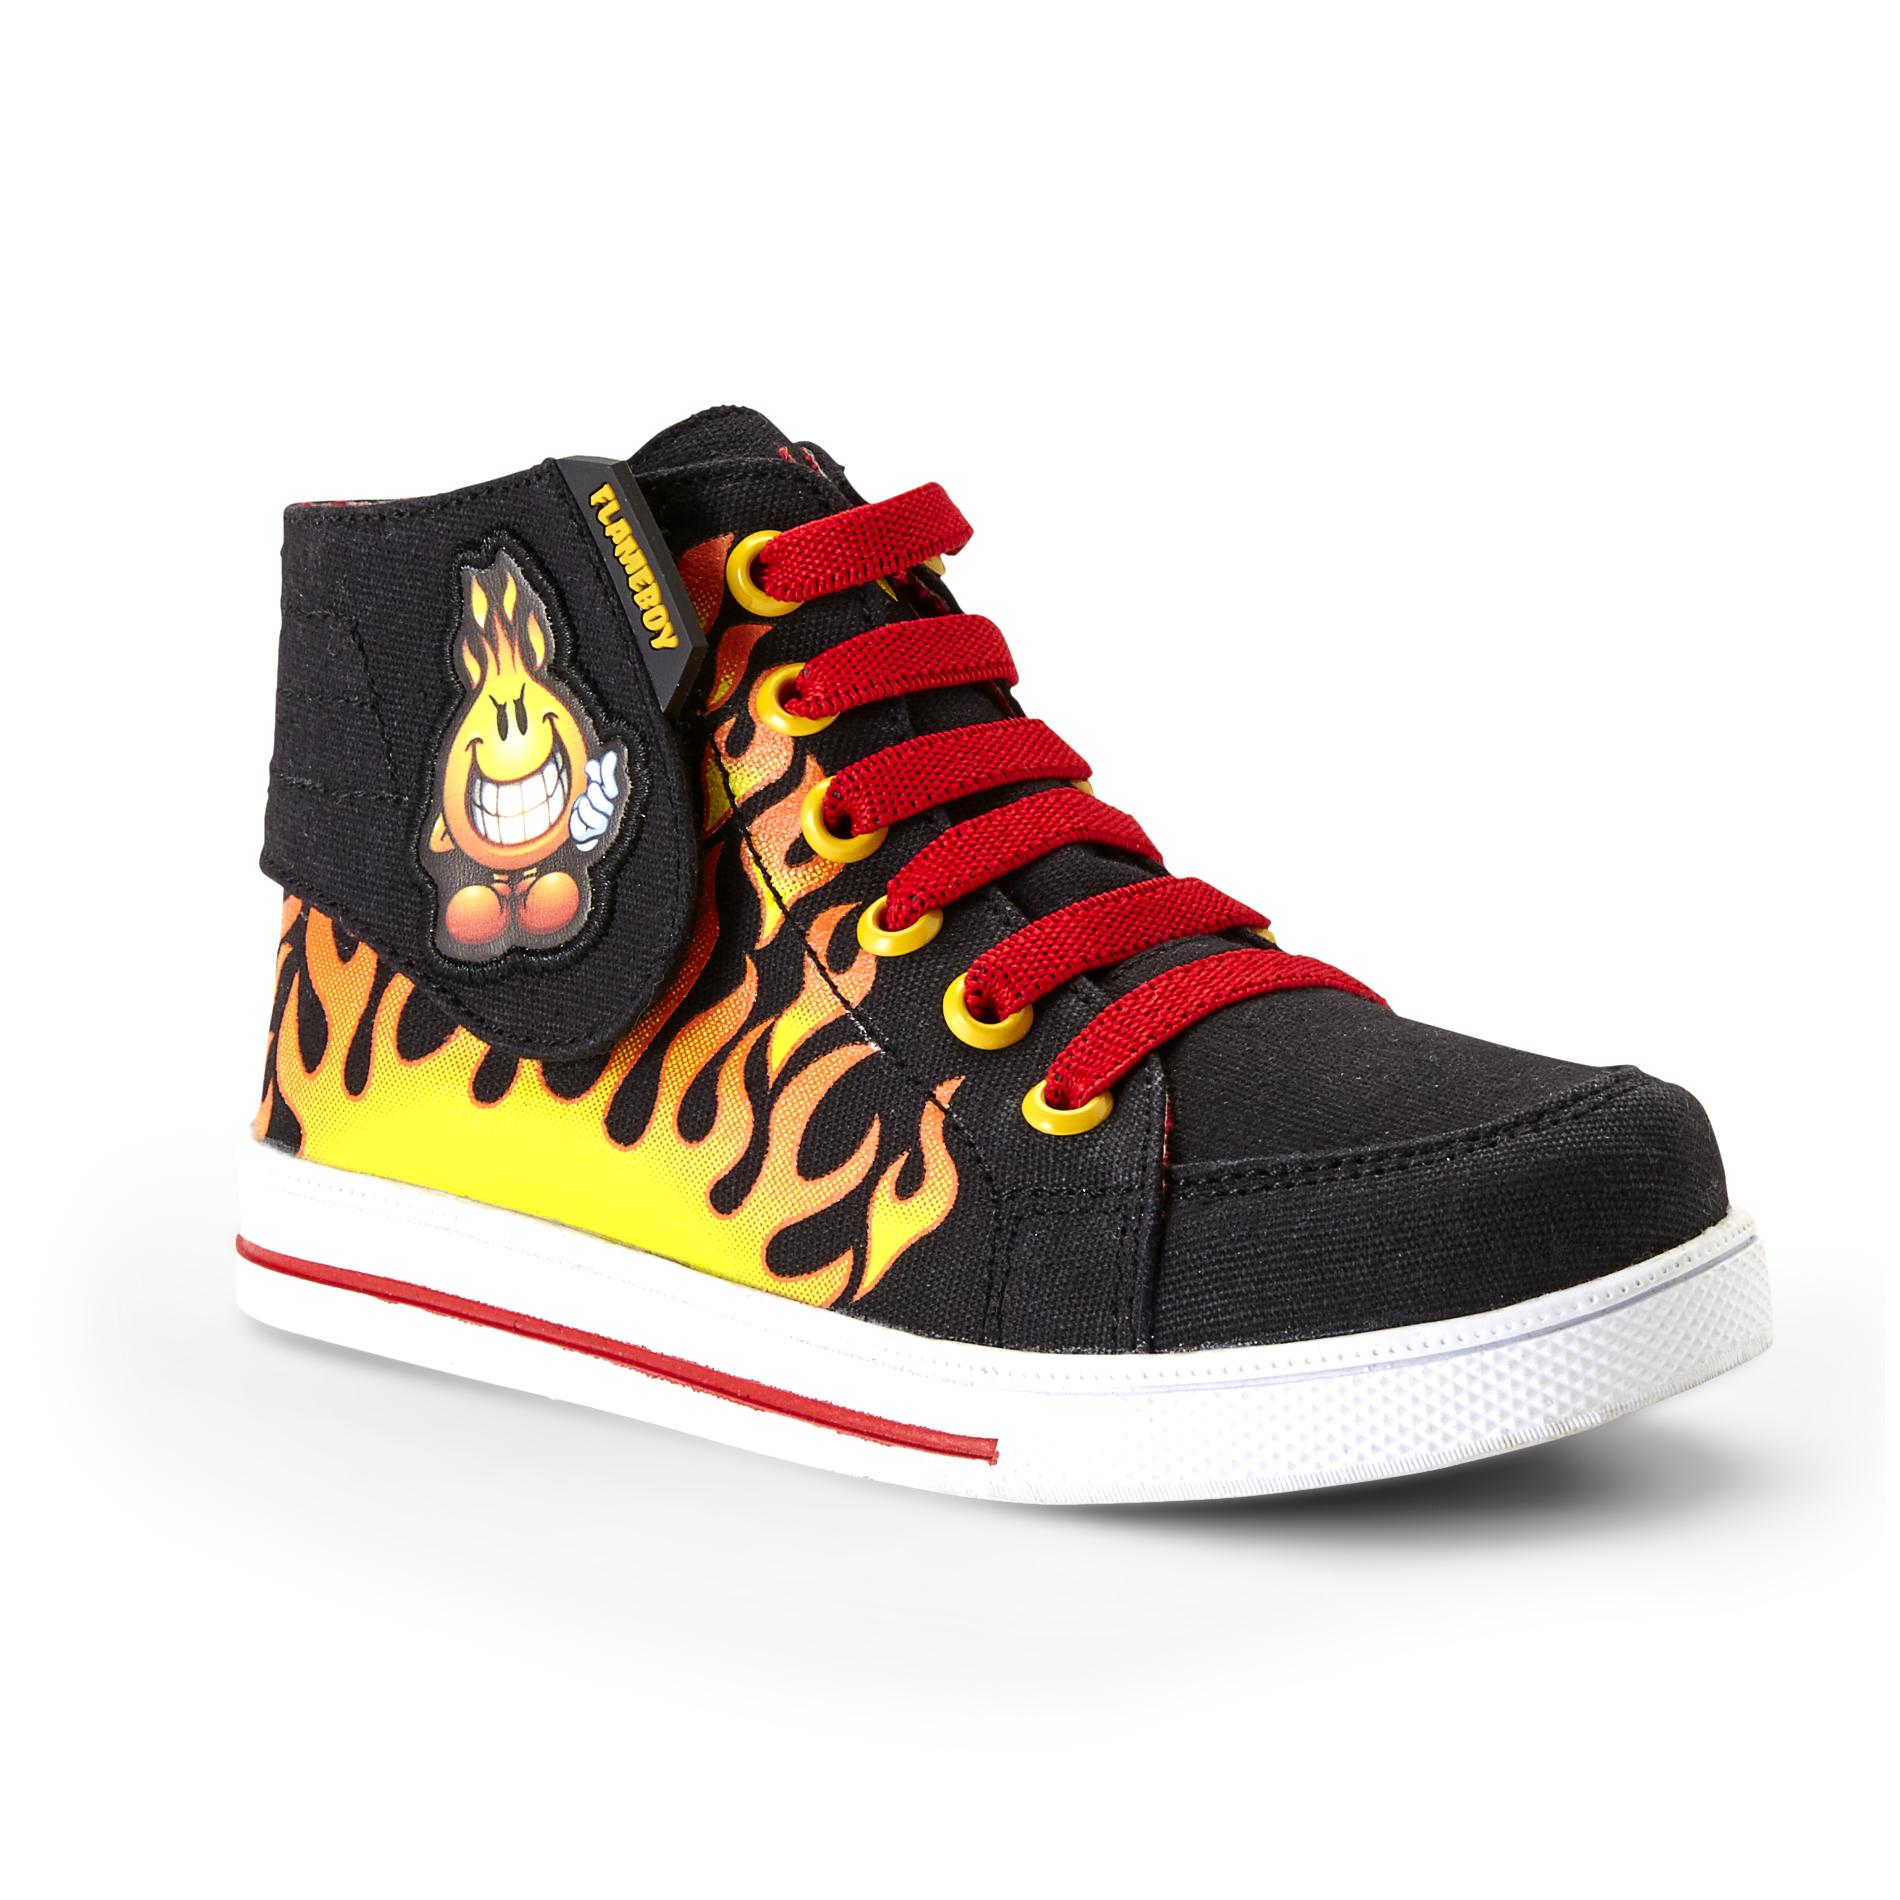 World Industries Flameboy Boy's Mayhem Black/Red High-Top Athletic Shoe